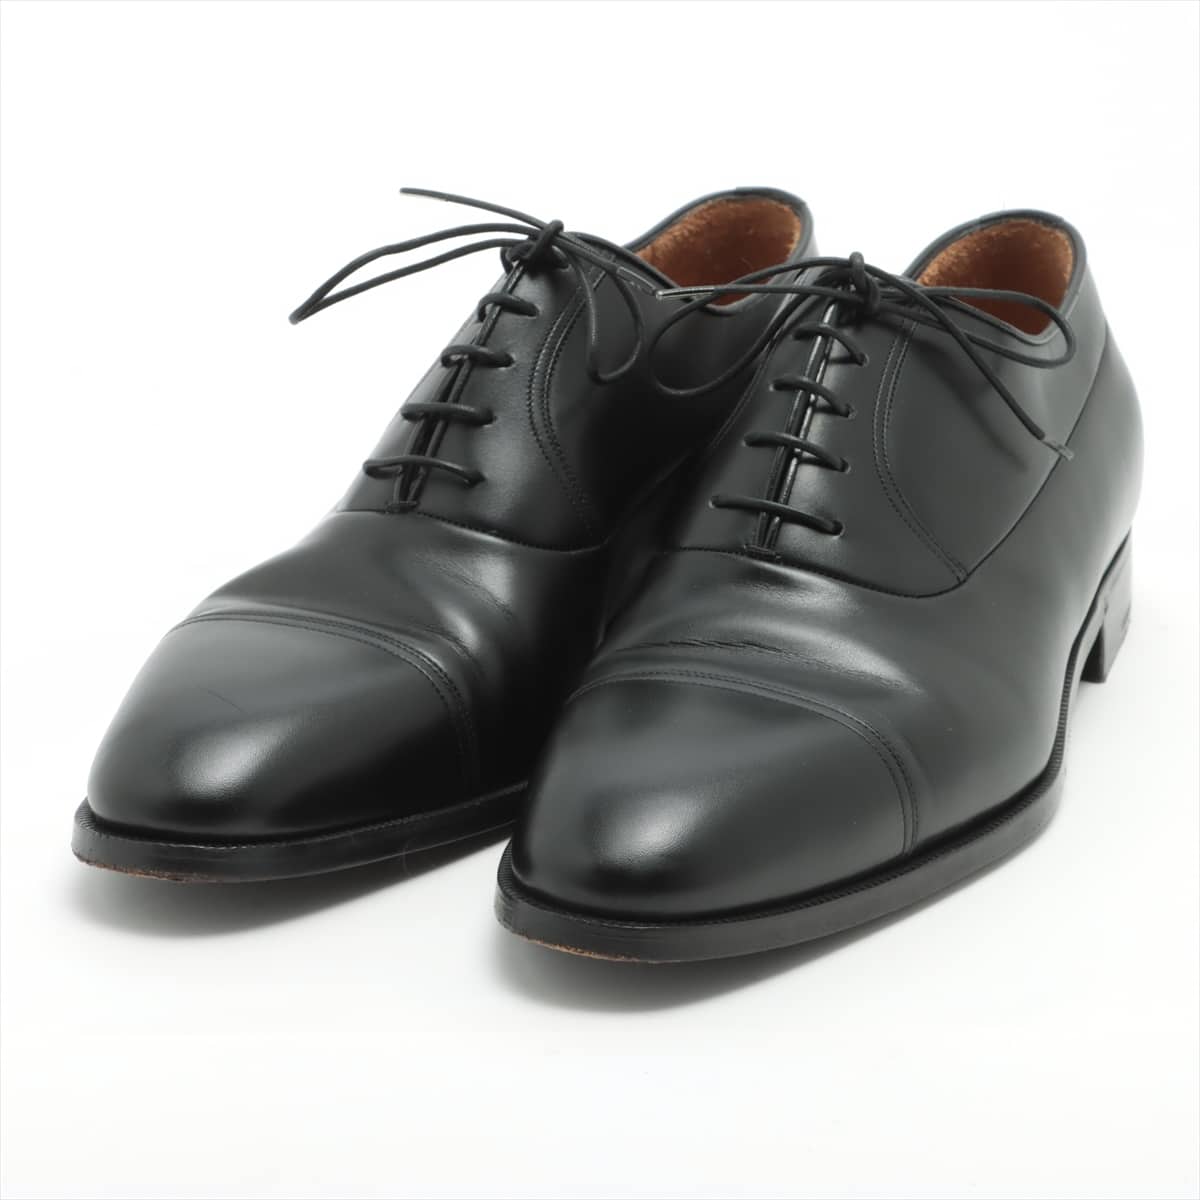 Berluti Leather Dress shoes 8 1/2 Men's Black Oxford 623 Straight tip